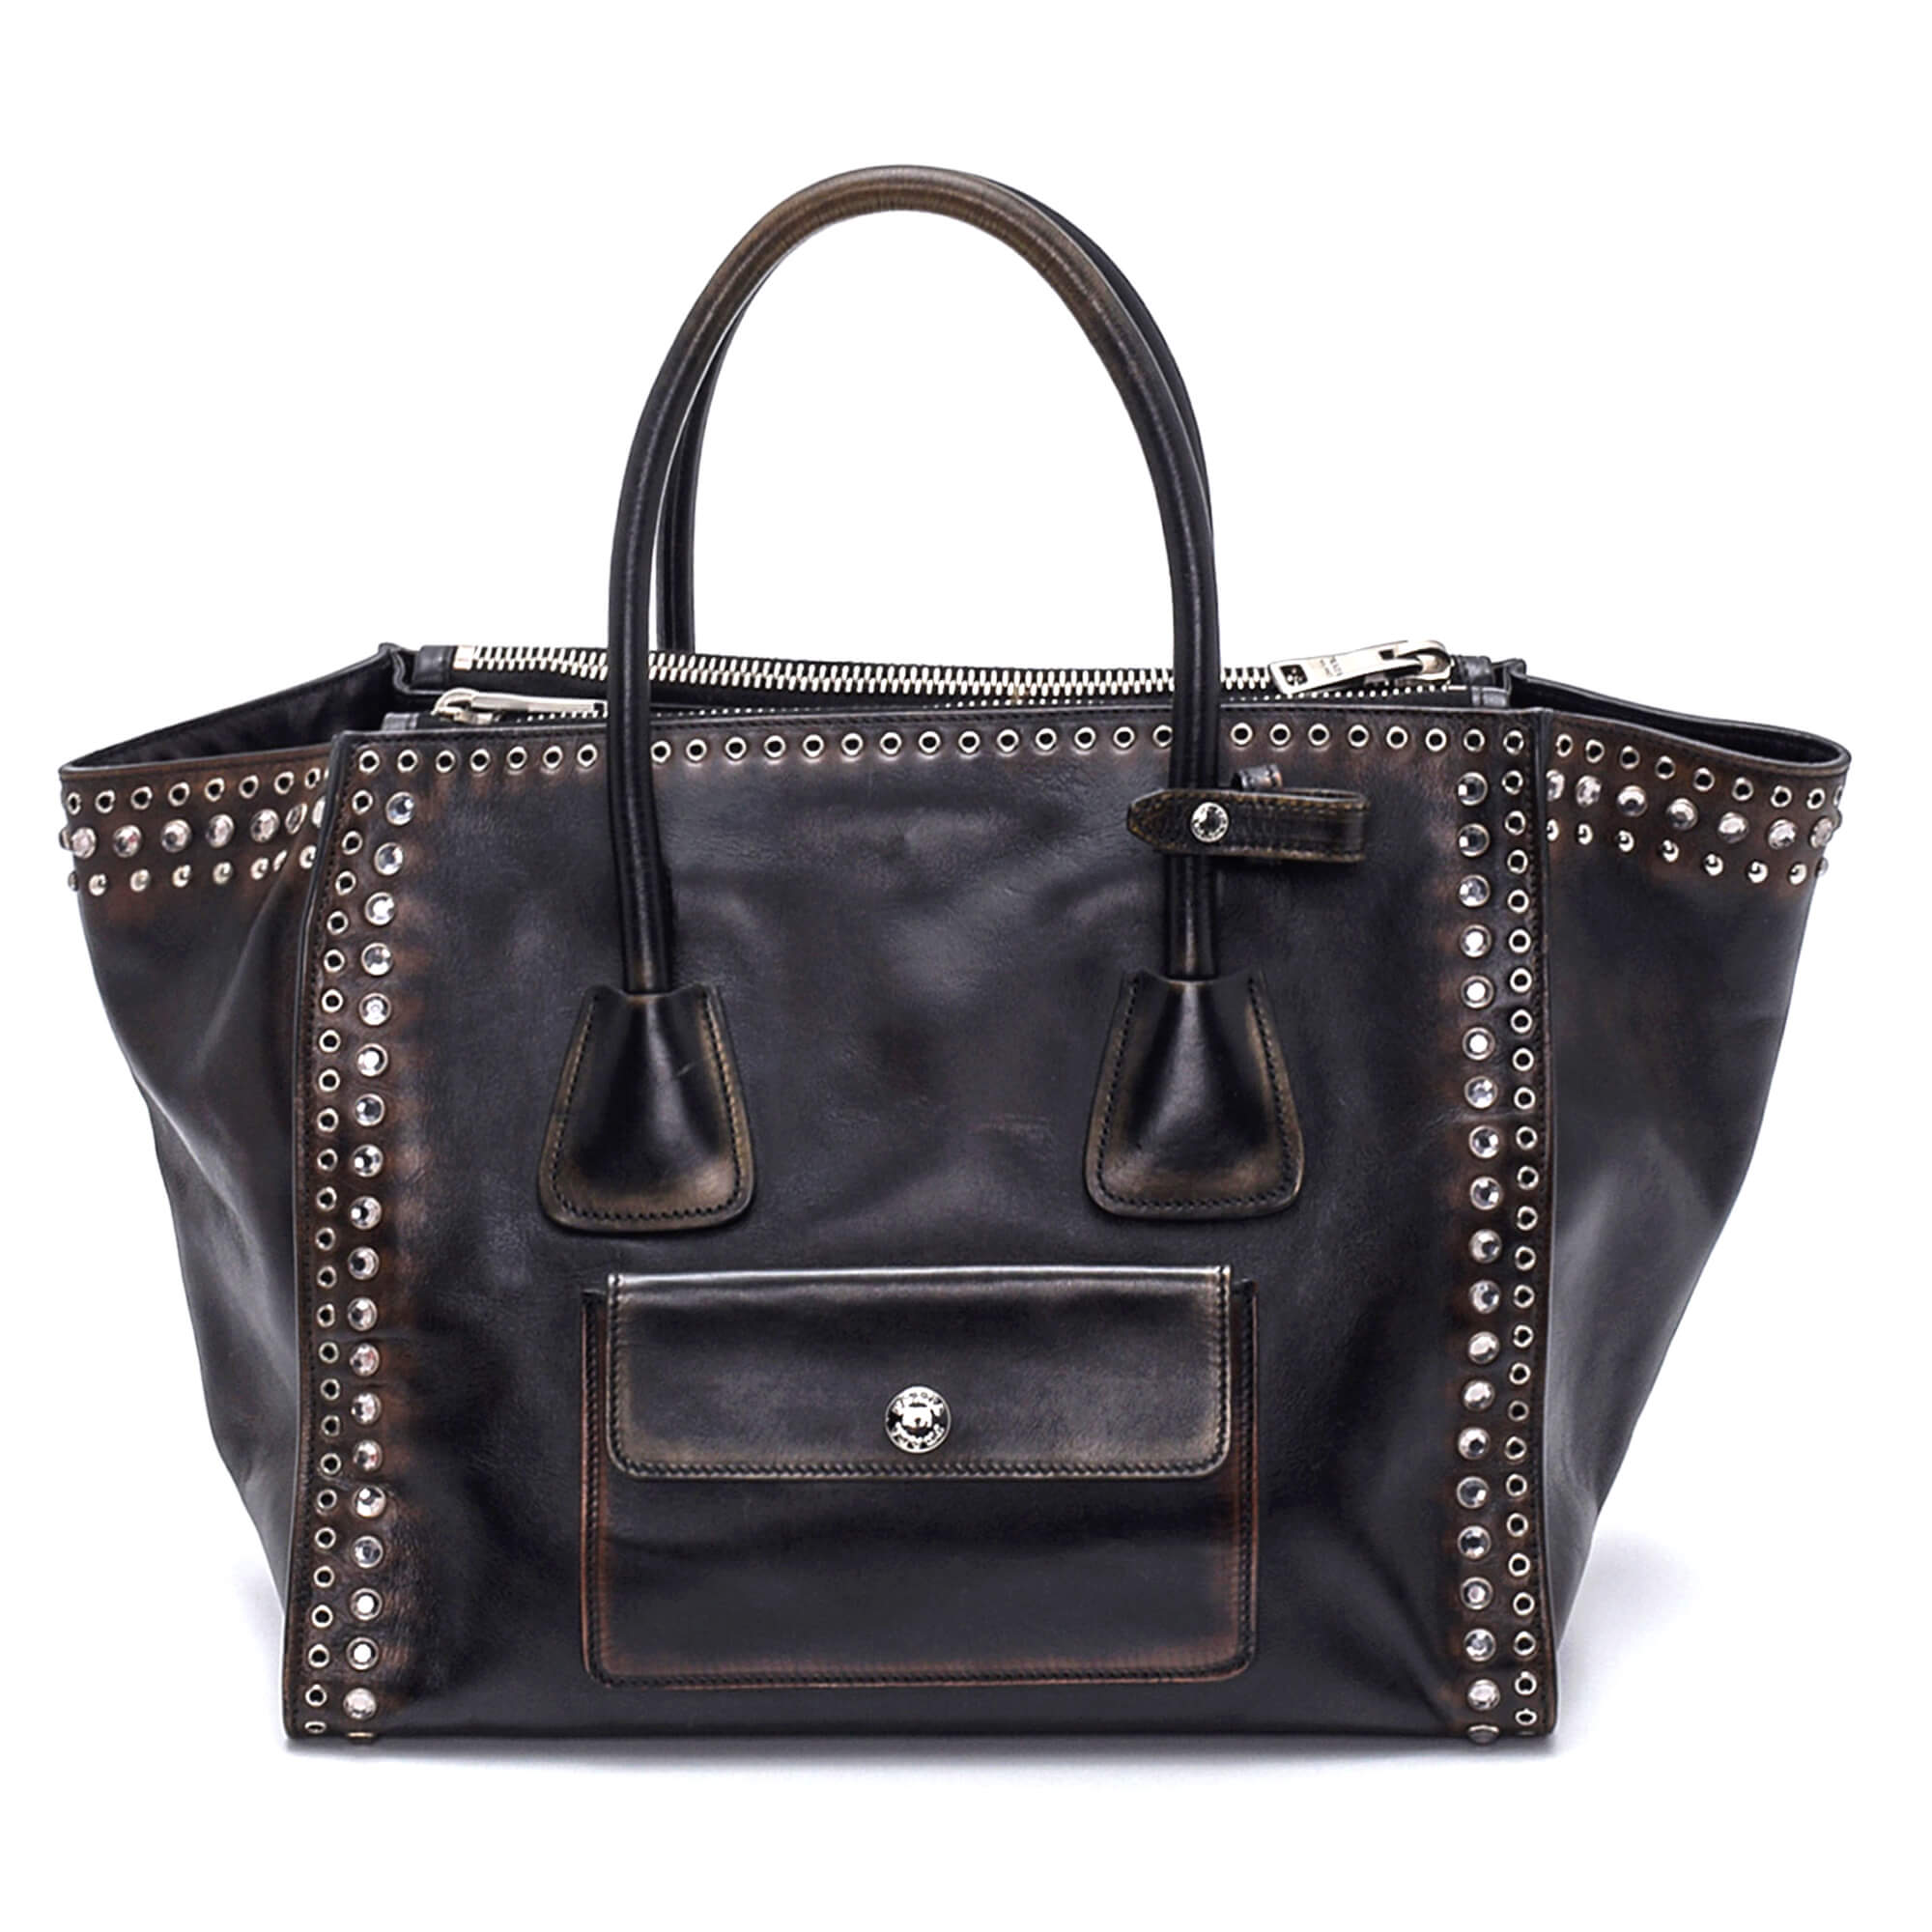 Prada - Dark Brown Leather / Crystal Studded Trapeze Bag 